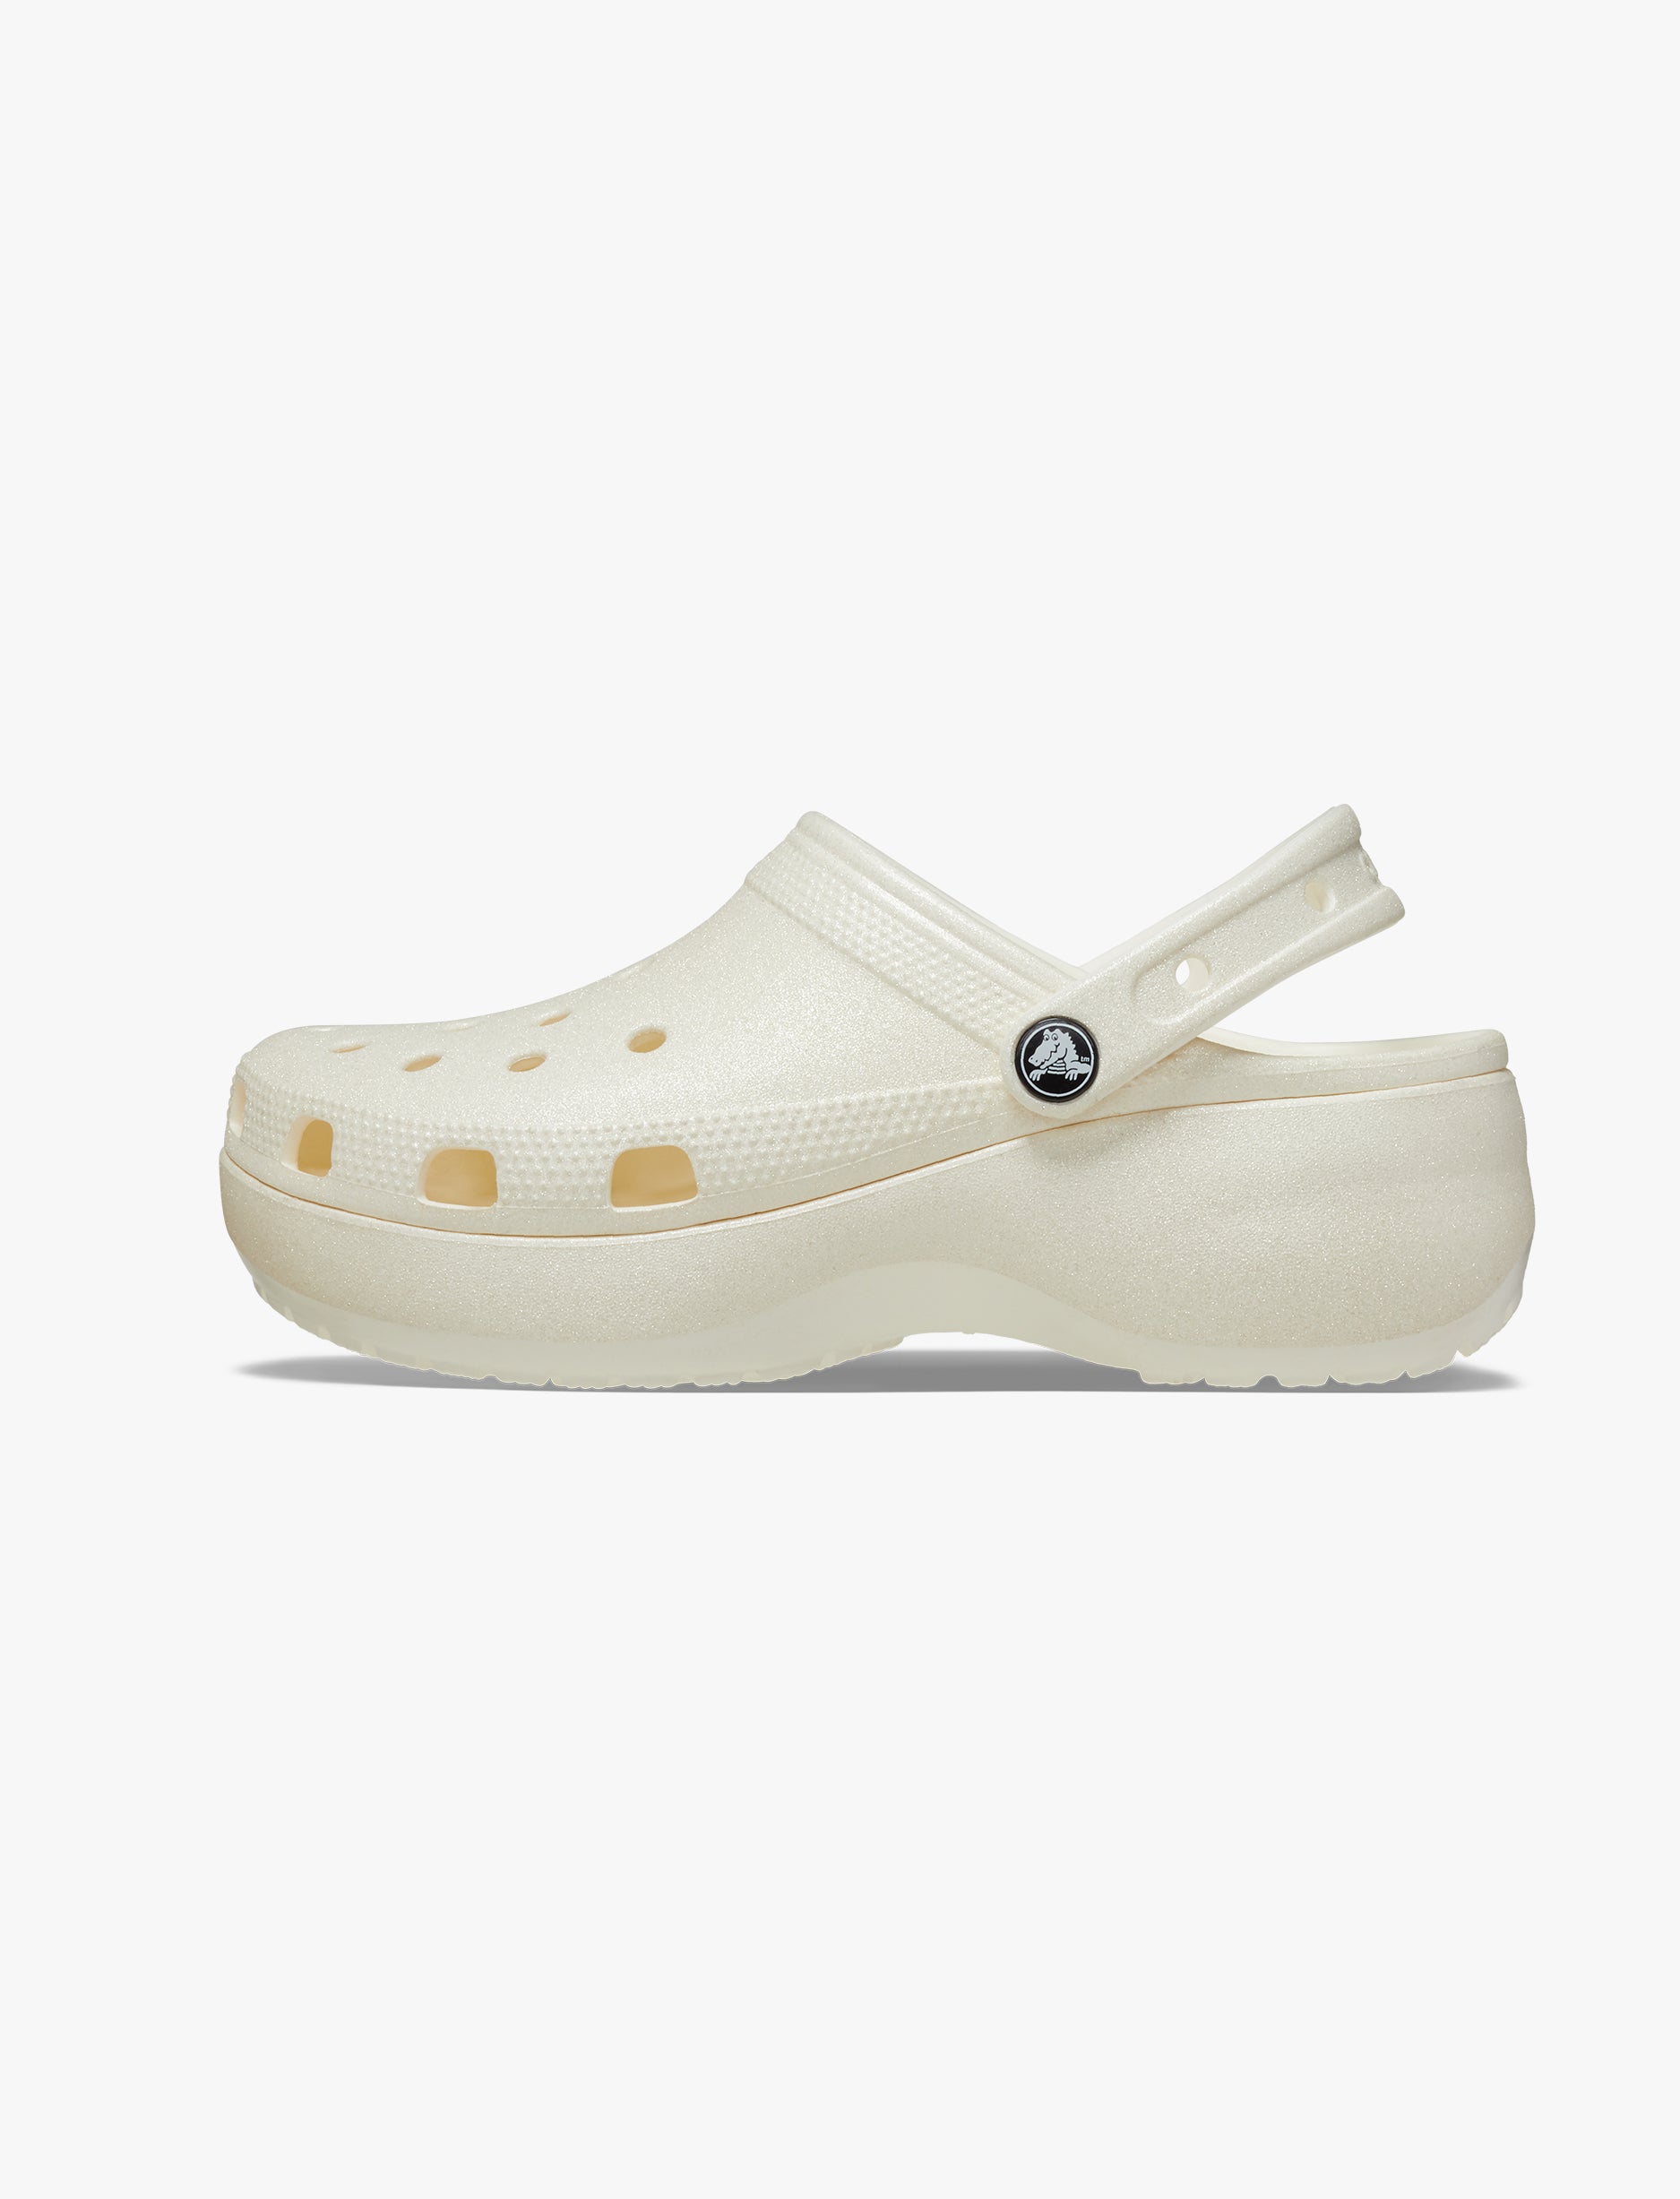 Crocs Classic Platform Glitter Clog W - כפכפי פלטפורמה נצנצים קרוקס לנשים בצבע לבן גיר